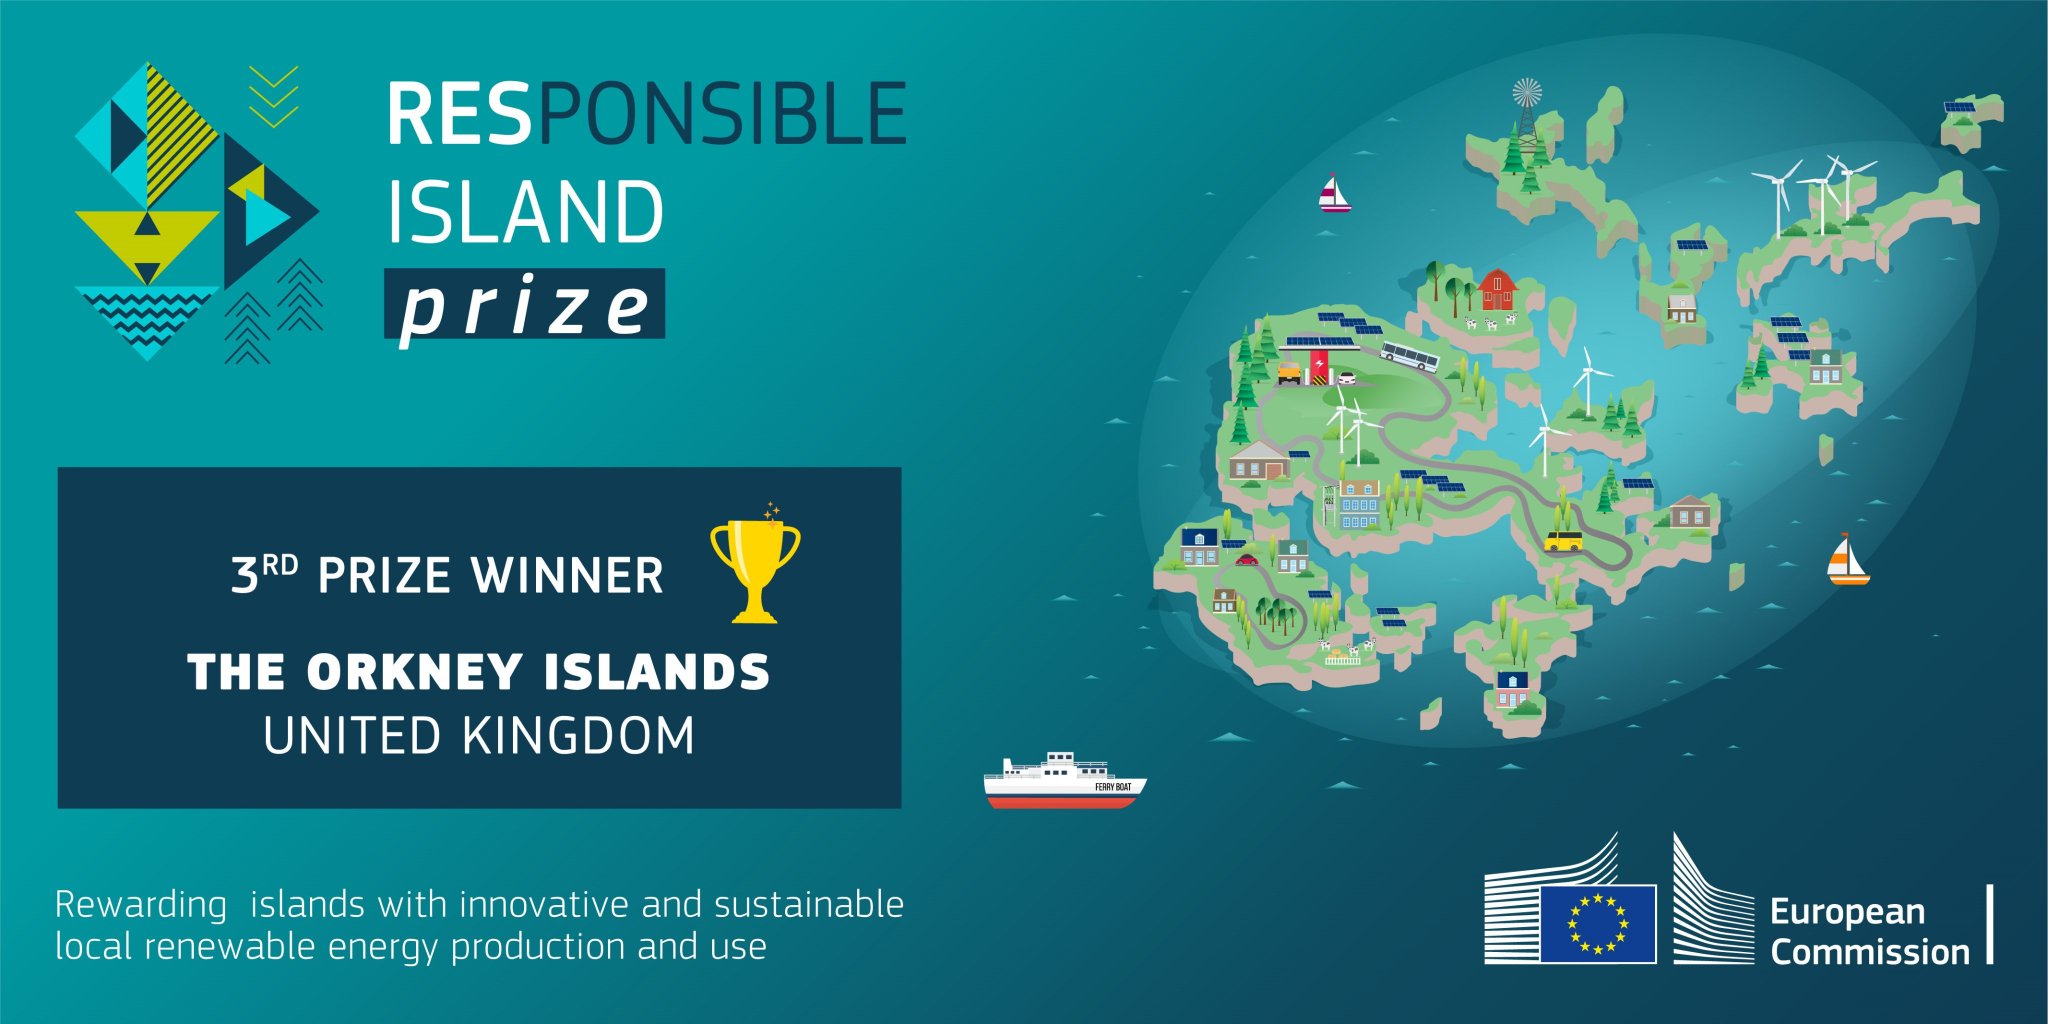 Responsible Island prize